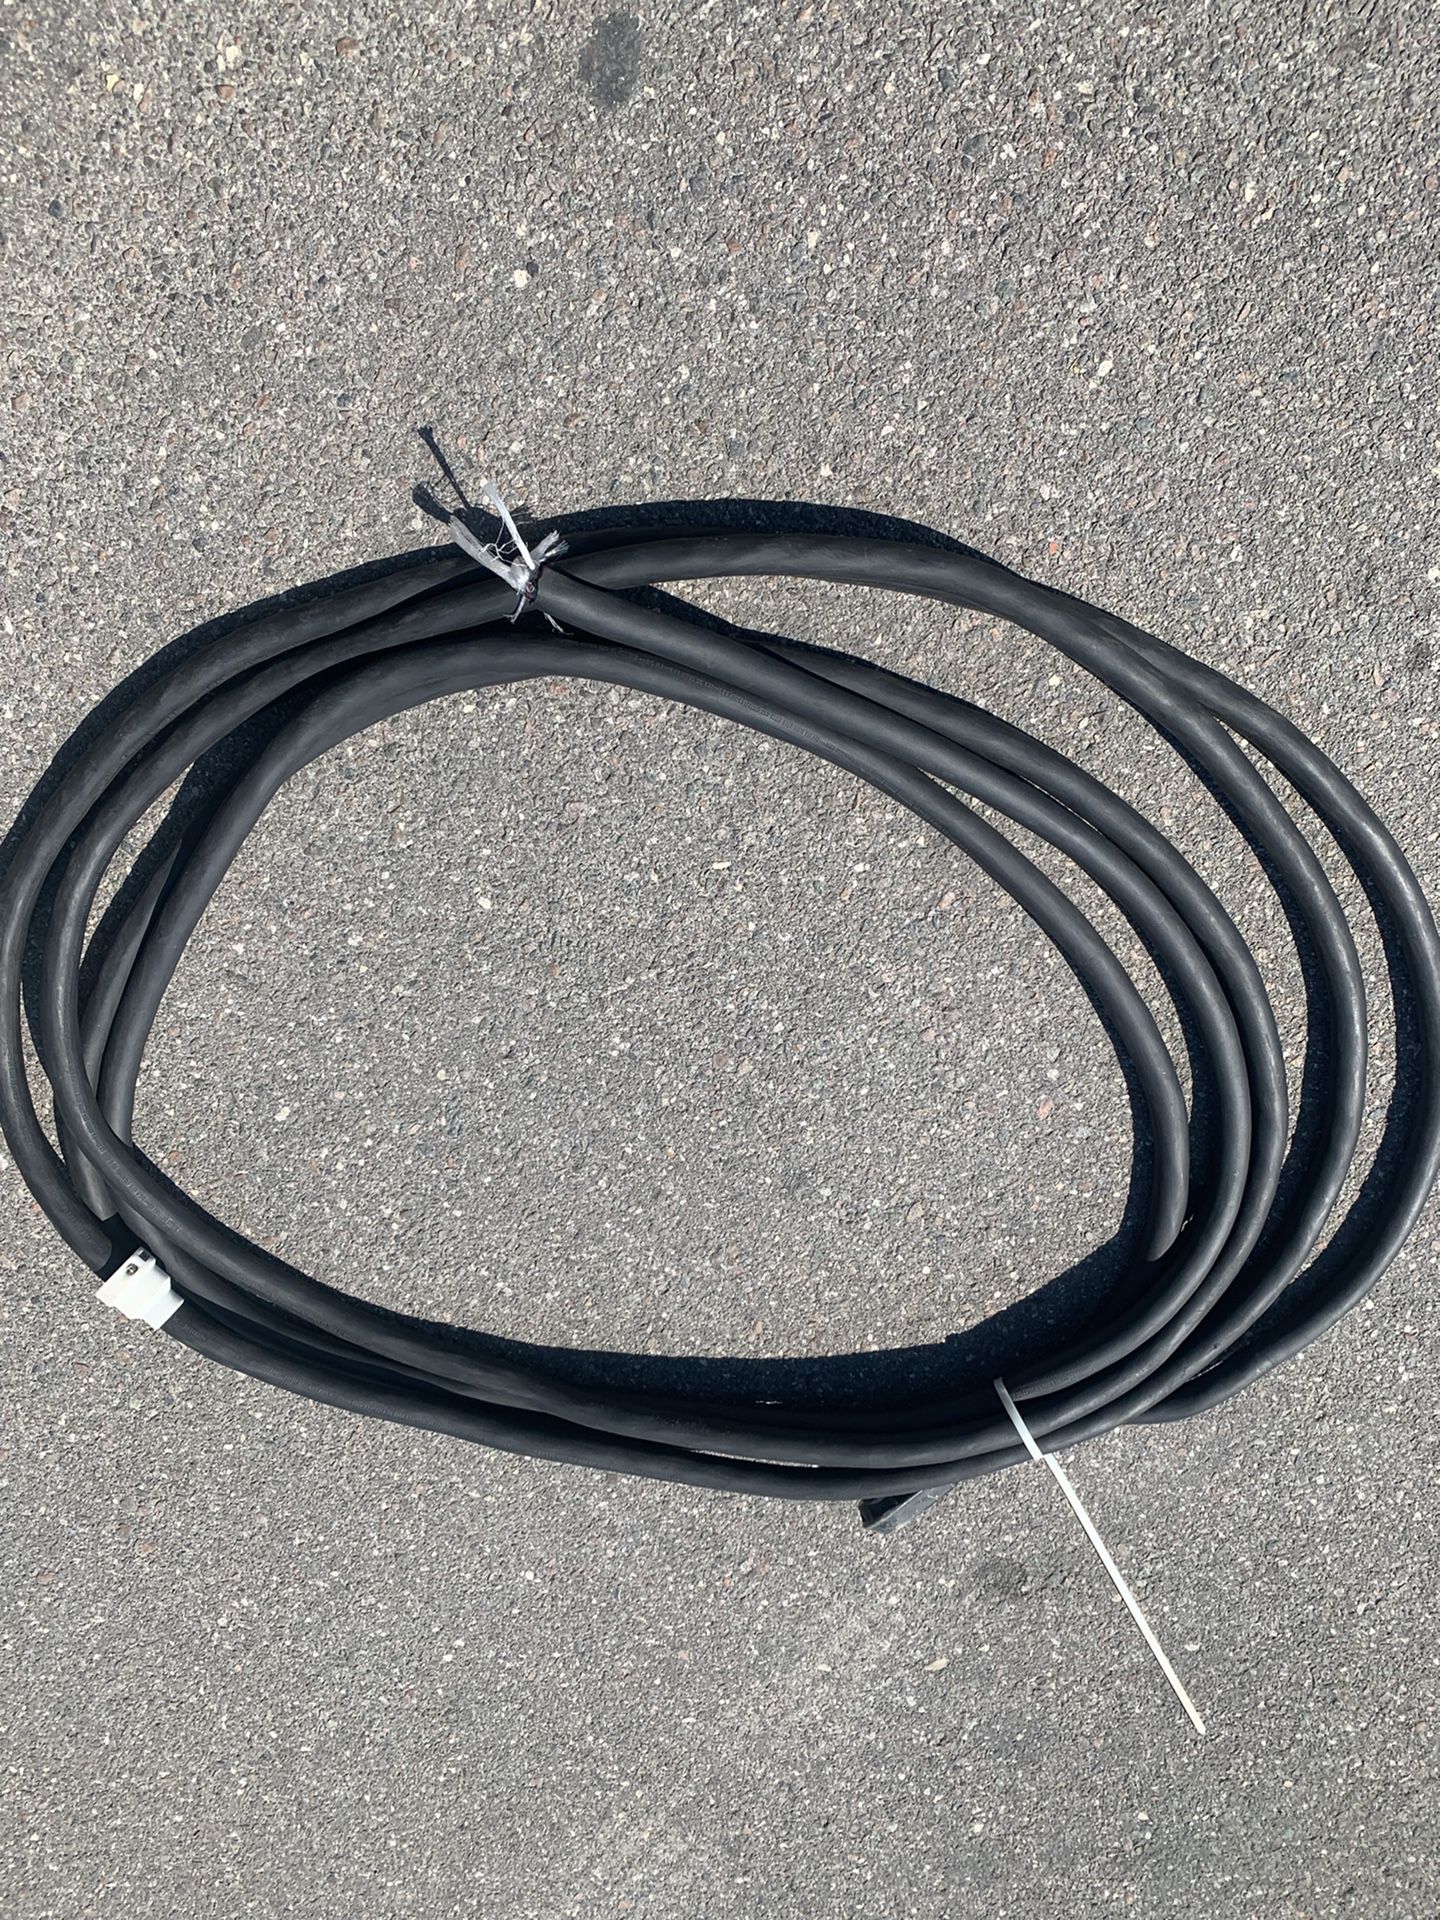 50 amp rv power cord